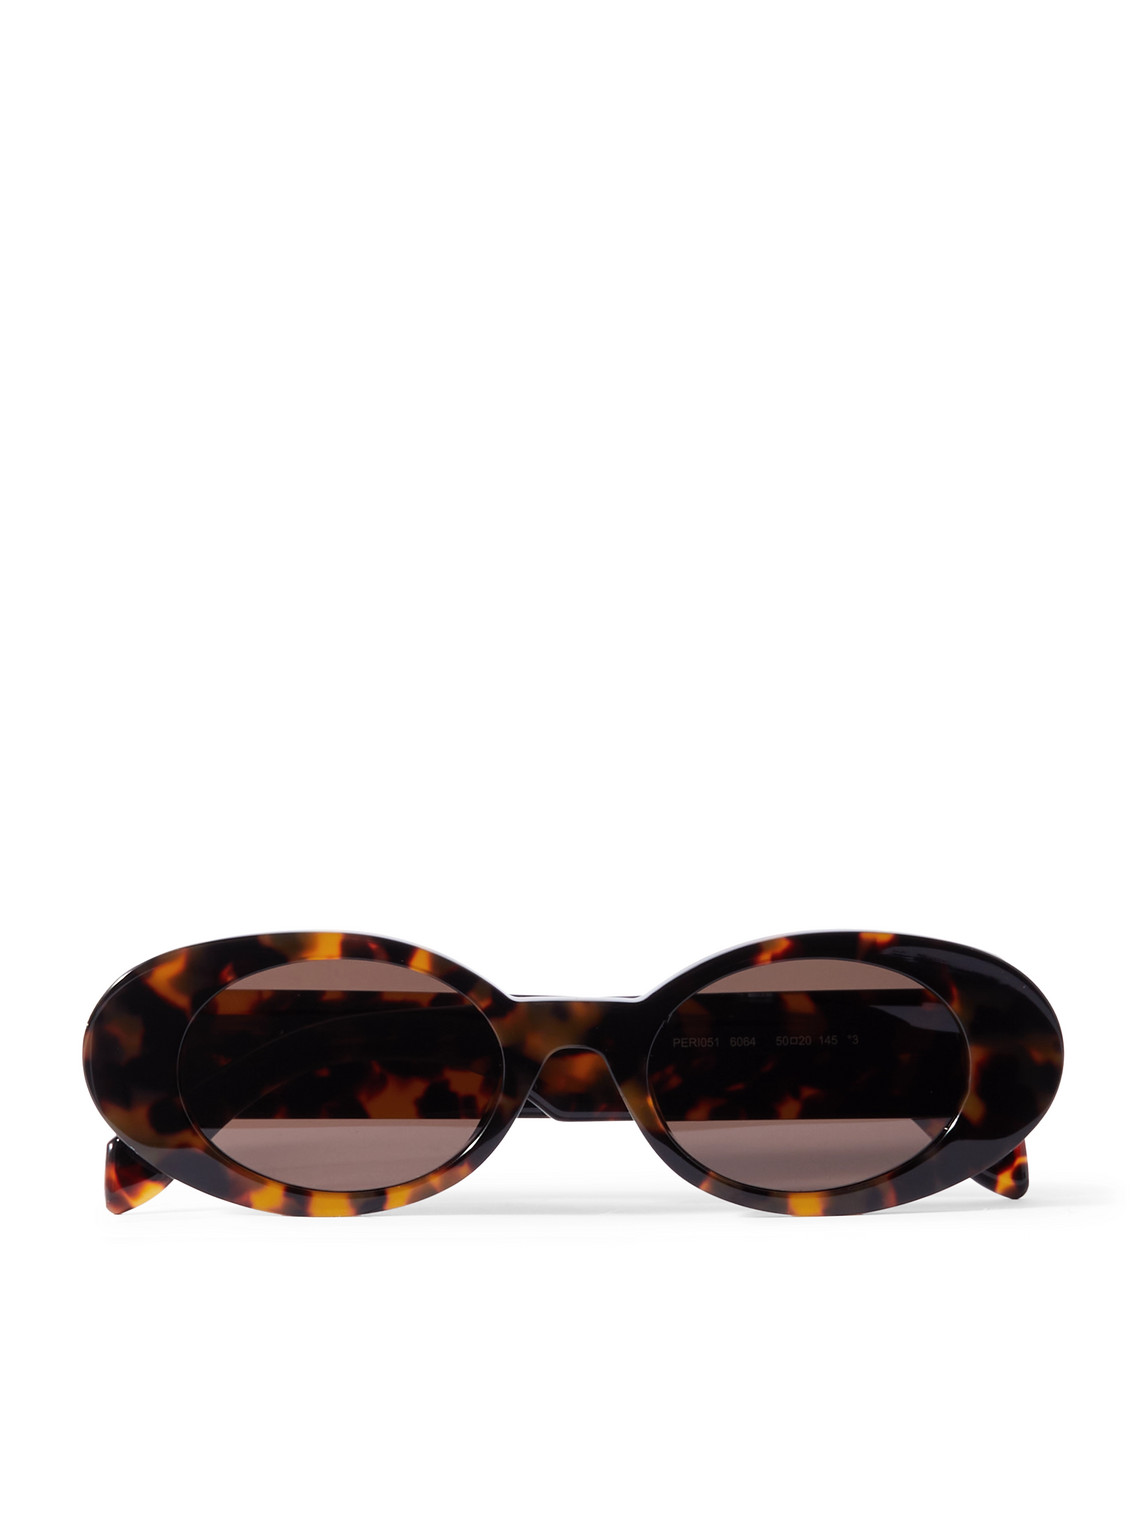 Palm Angels - Gilroy Round-Frame Tortoiseshell Acetate Sunglasses - Men - Tortoiseshell von Palm Angels